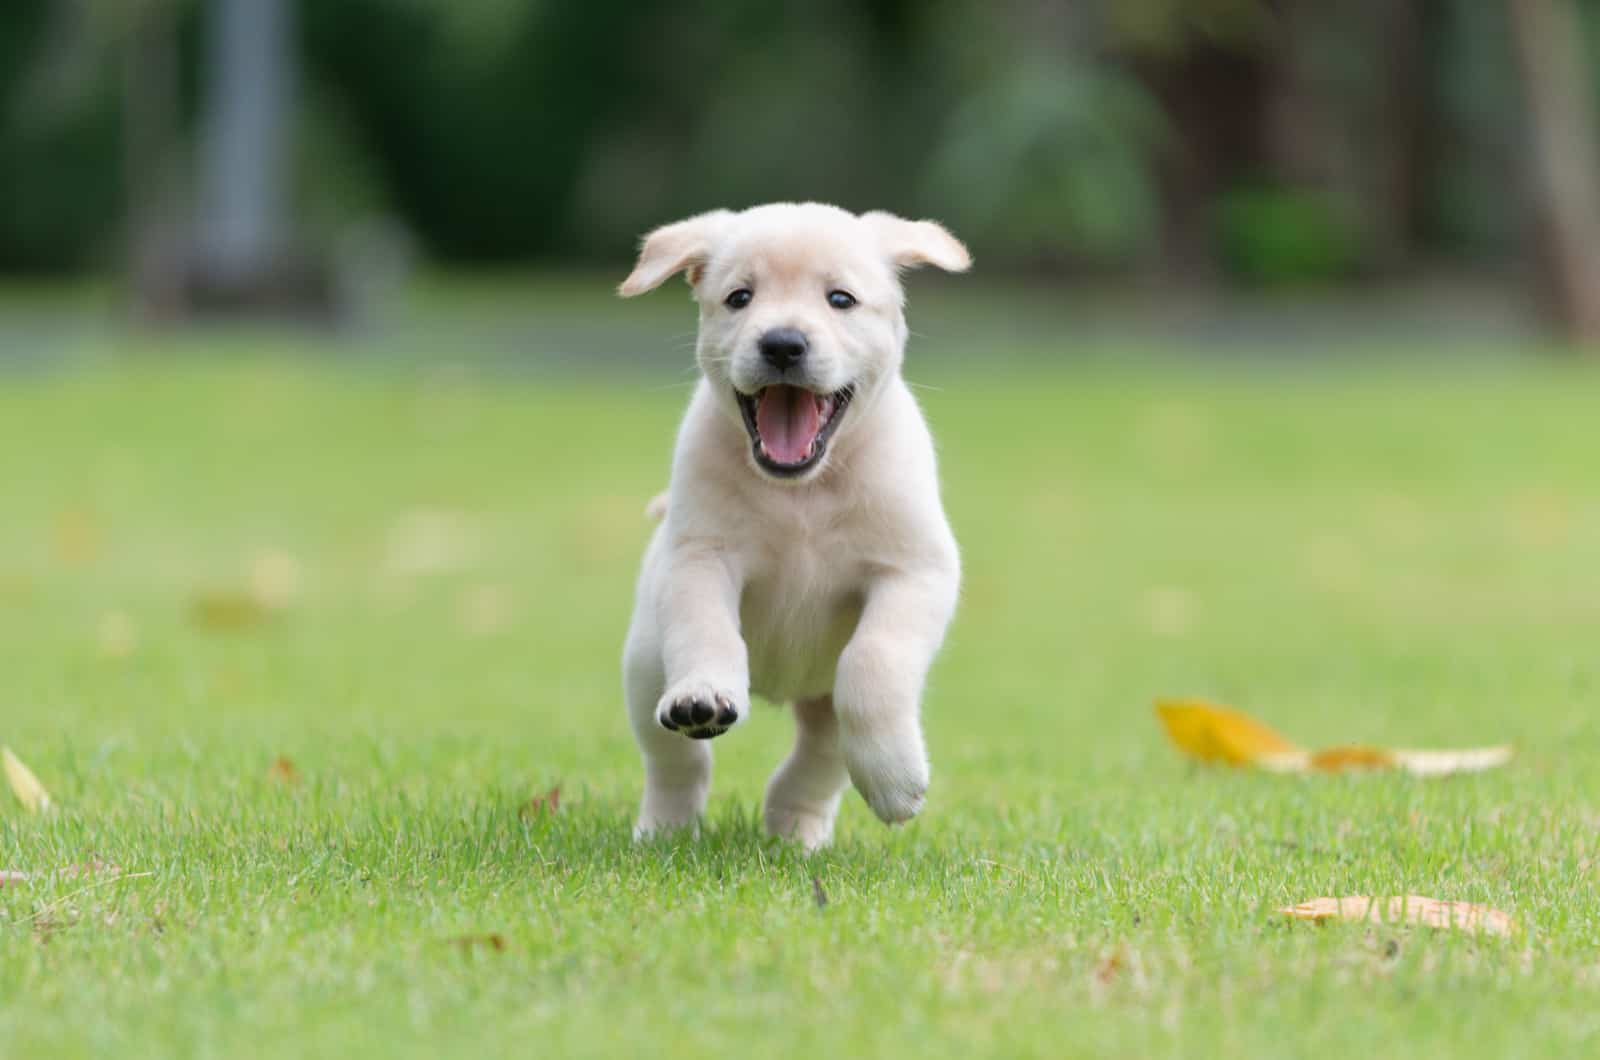 Labrador Retriever puppy runs across the field